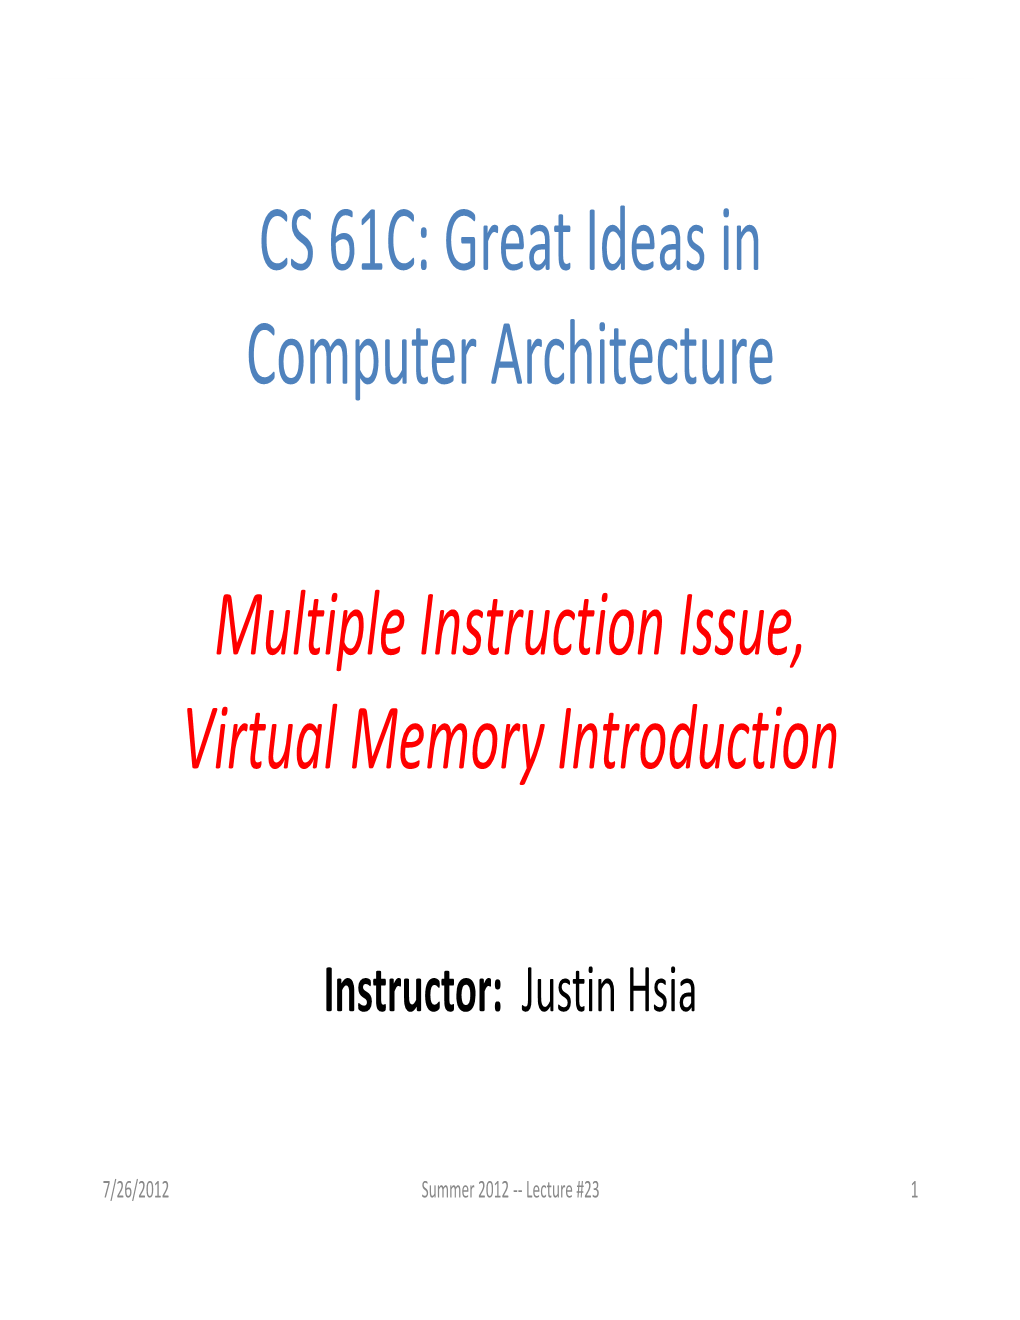 Virtual Memory Introduction